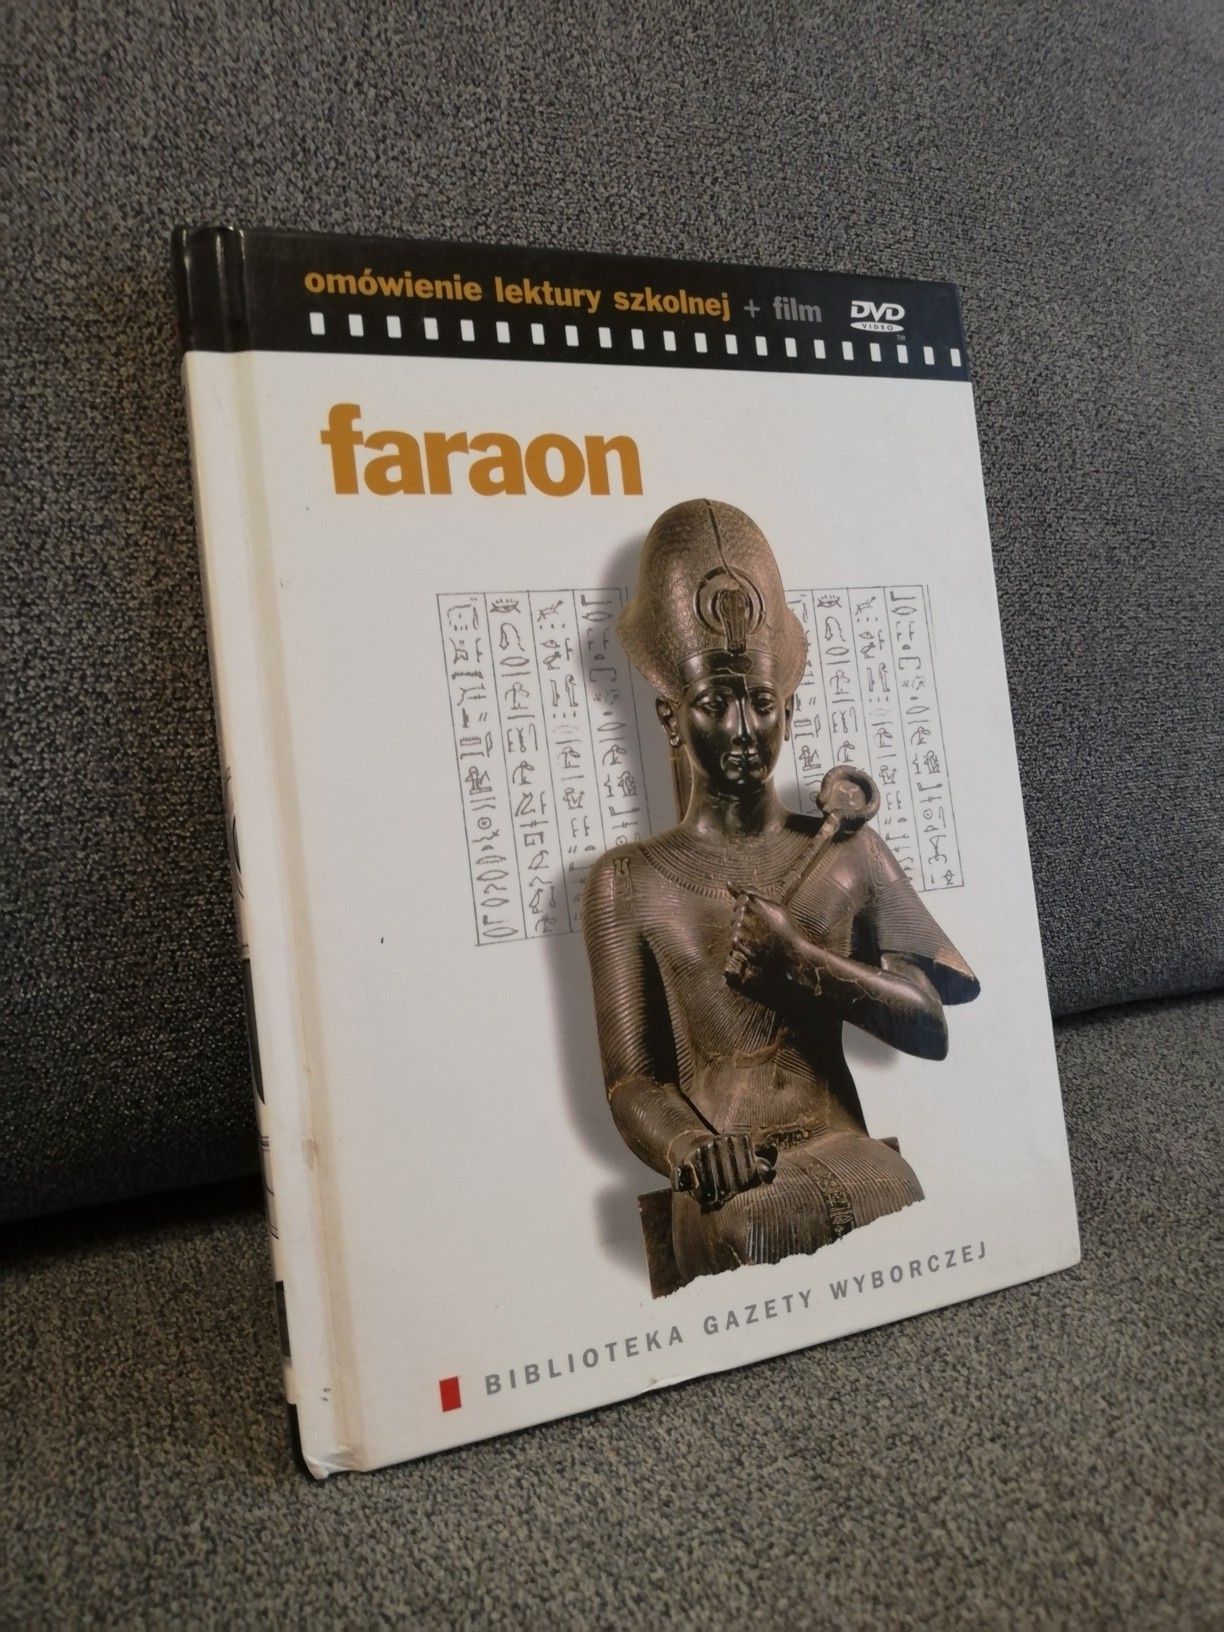 Faraon DVD książka z filmem